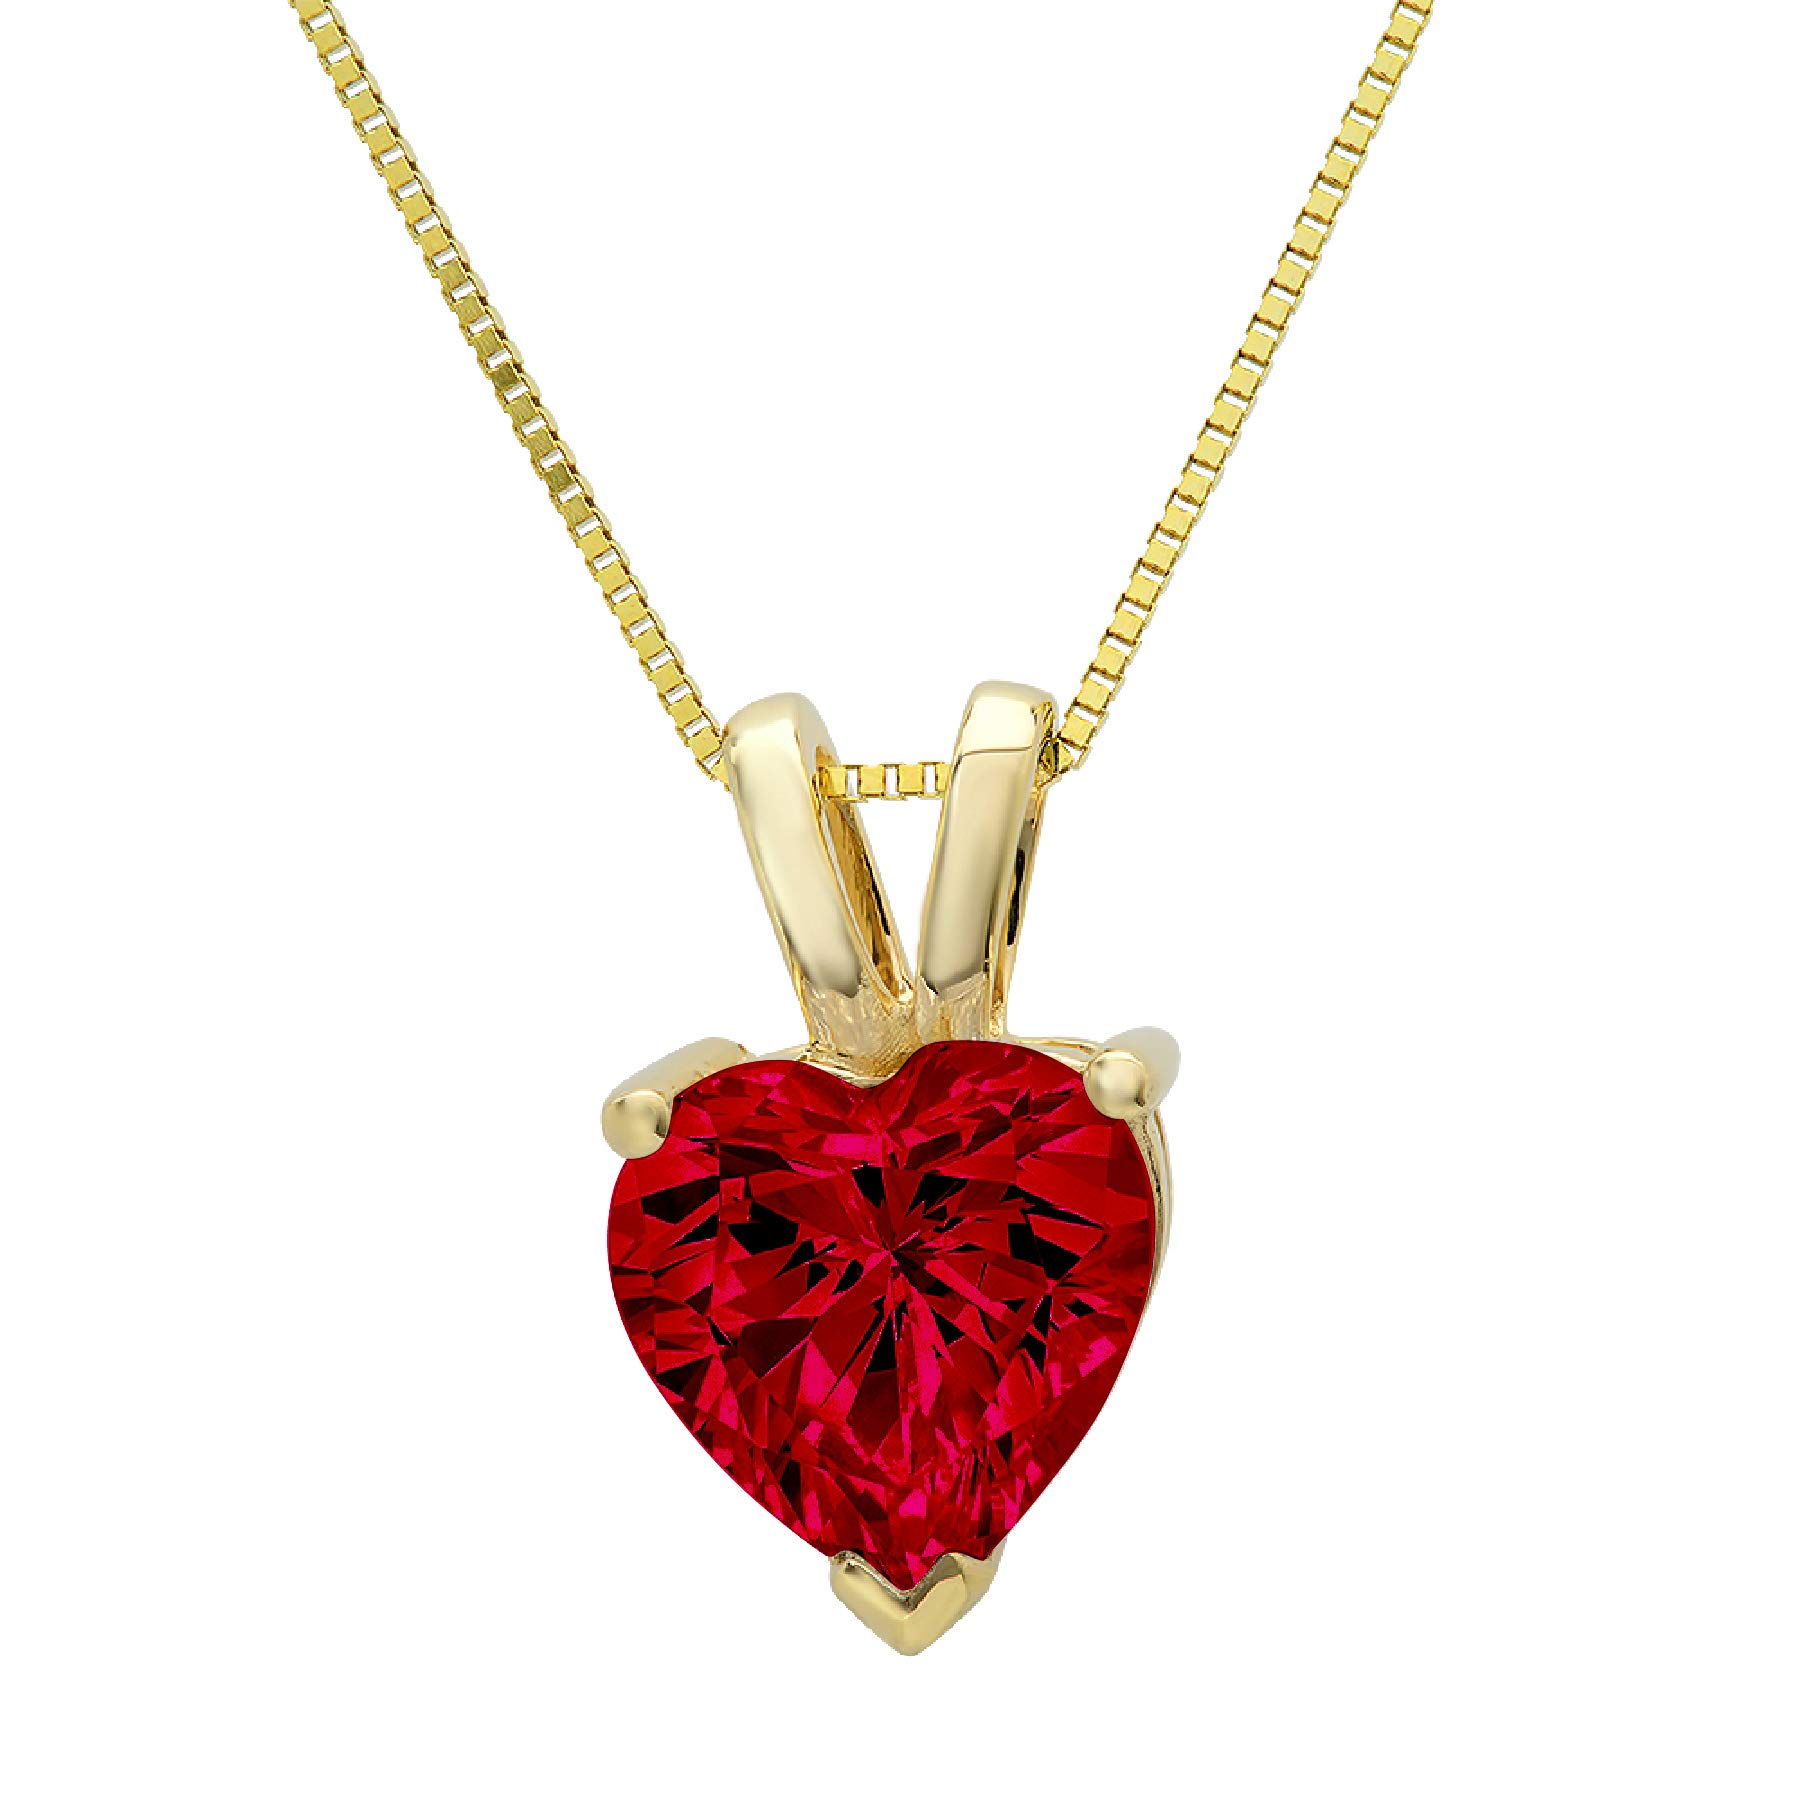 Clara Pucci 2.0 ct Brilliant Heart Cut Solitaire Pendant Necklace - Genuine Natural Pomegranate Red Garnet Jewelry VVS1 D - 16